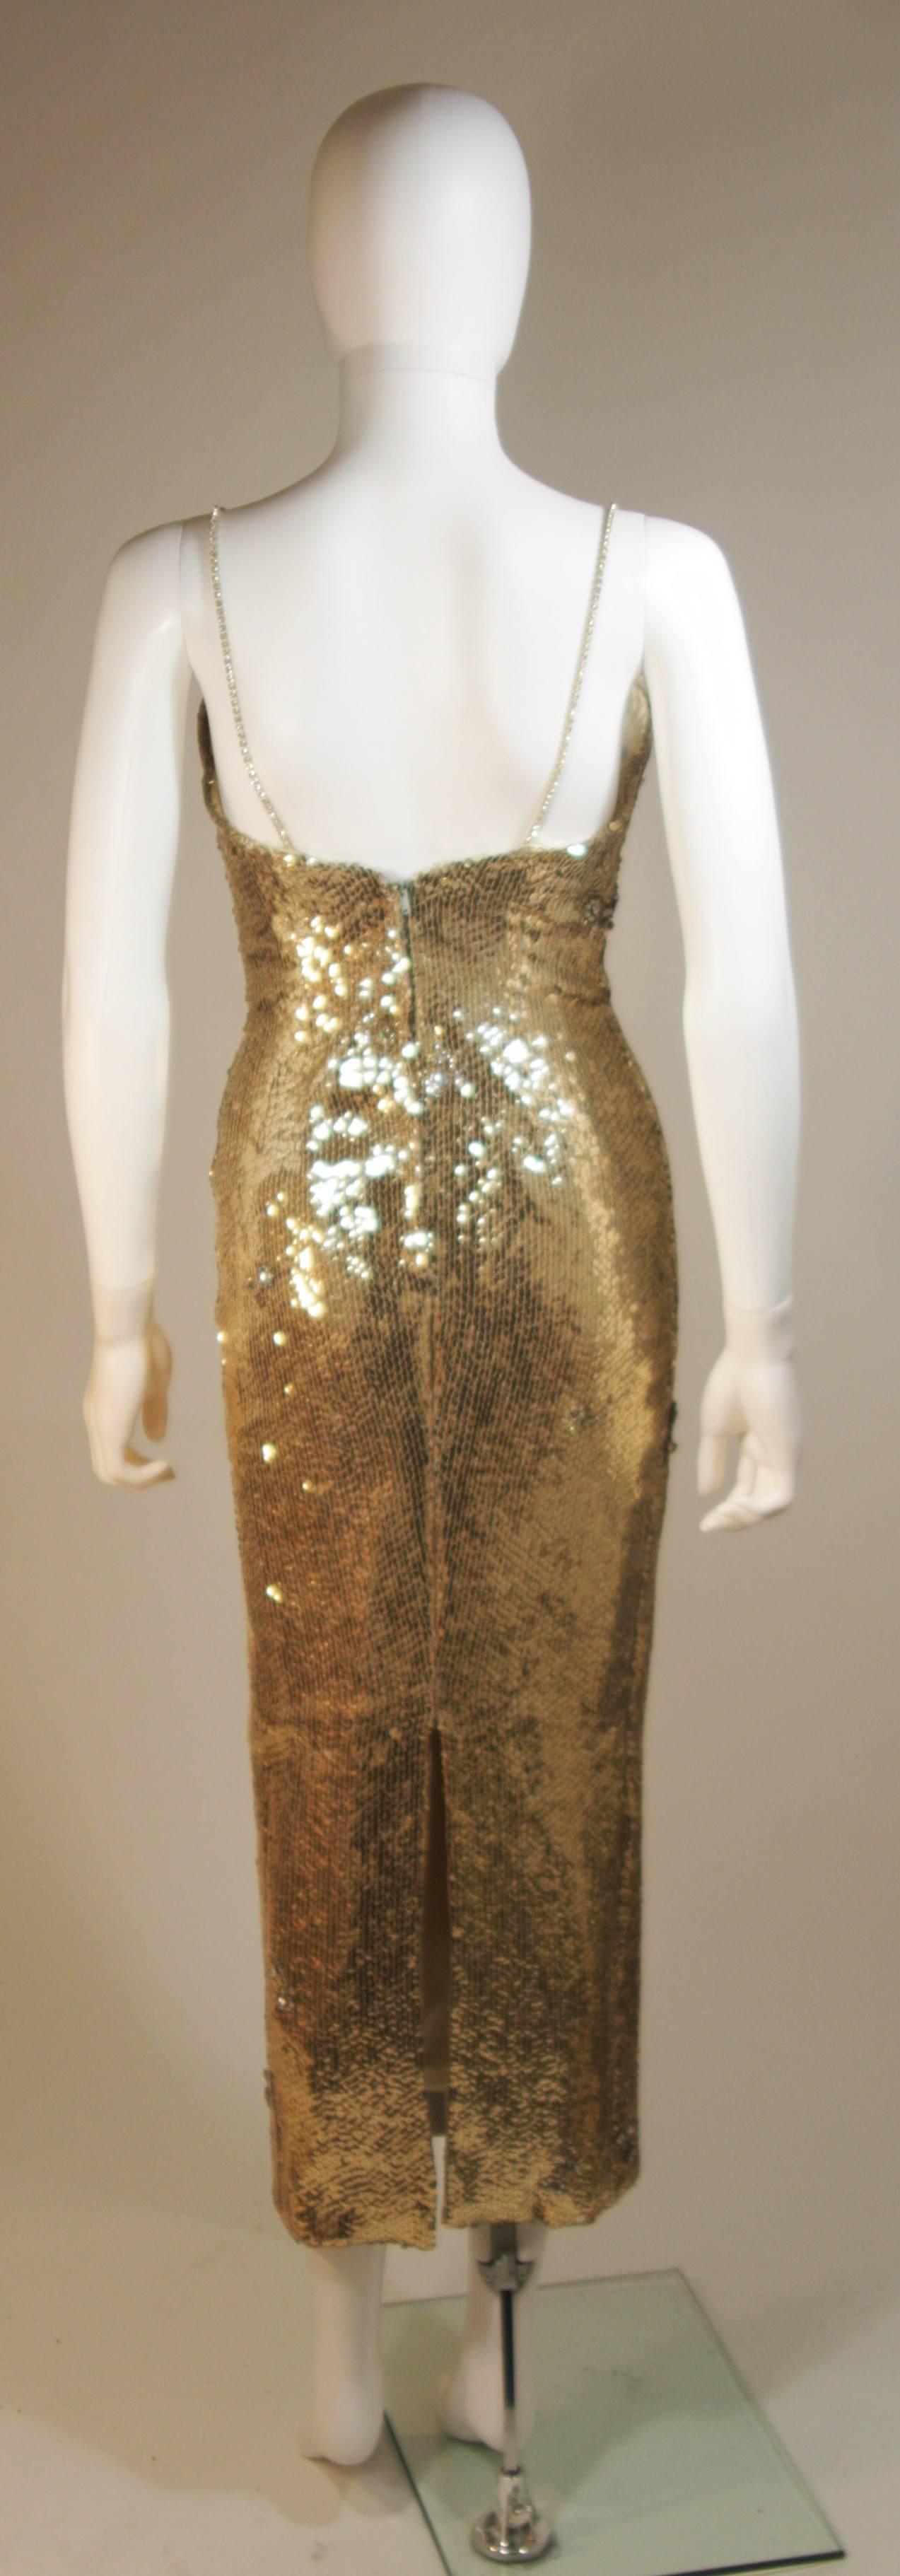 ELIZABETH MASON COUTURE Gold Sequin Gown, Rhinestone Applique & Straps Size 4 For Sale 2